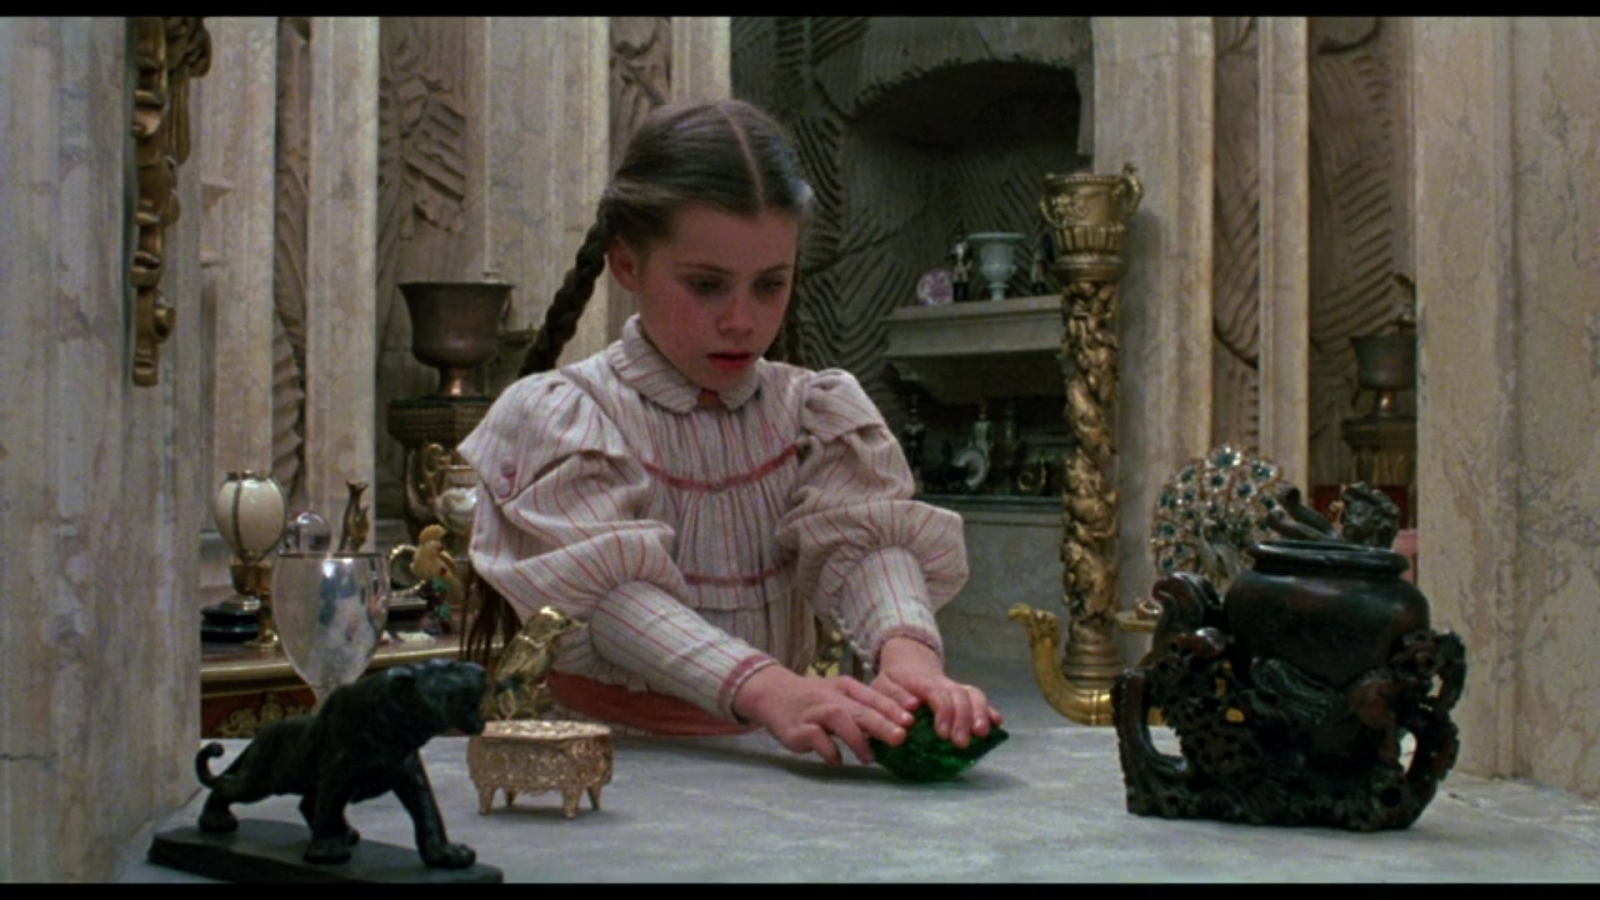 Dorothy examining The Scarecrow ornament